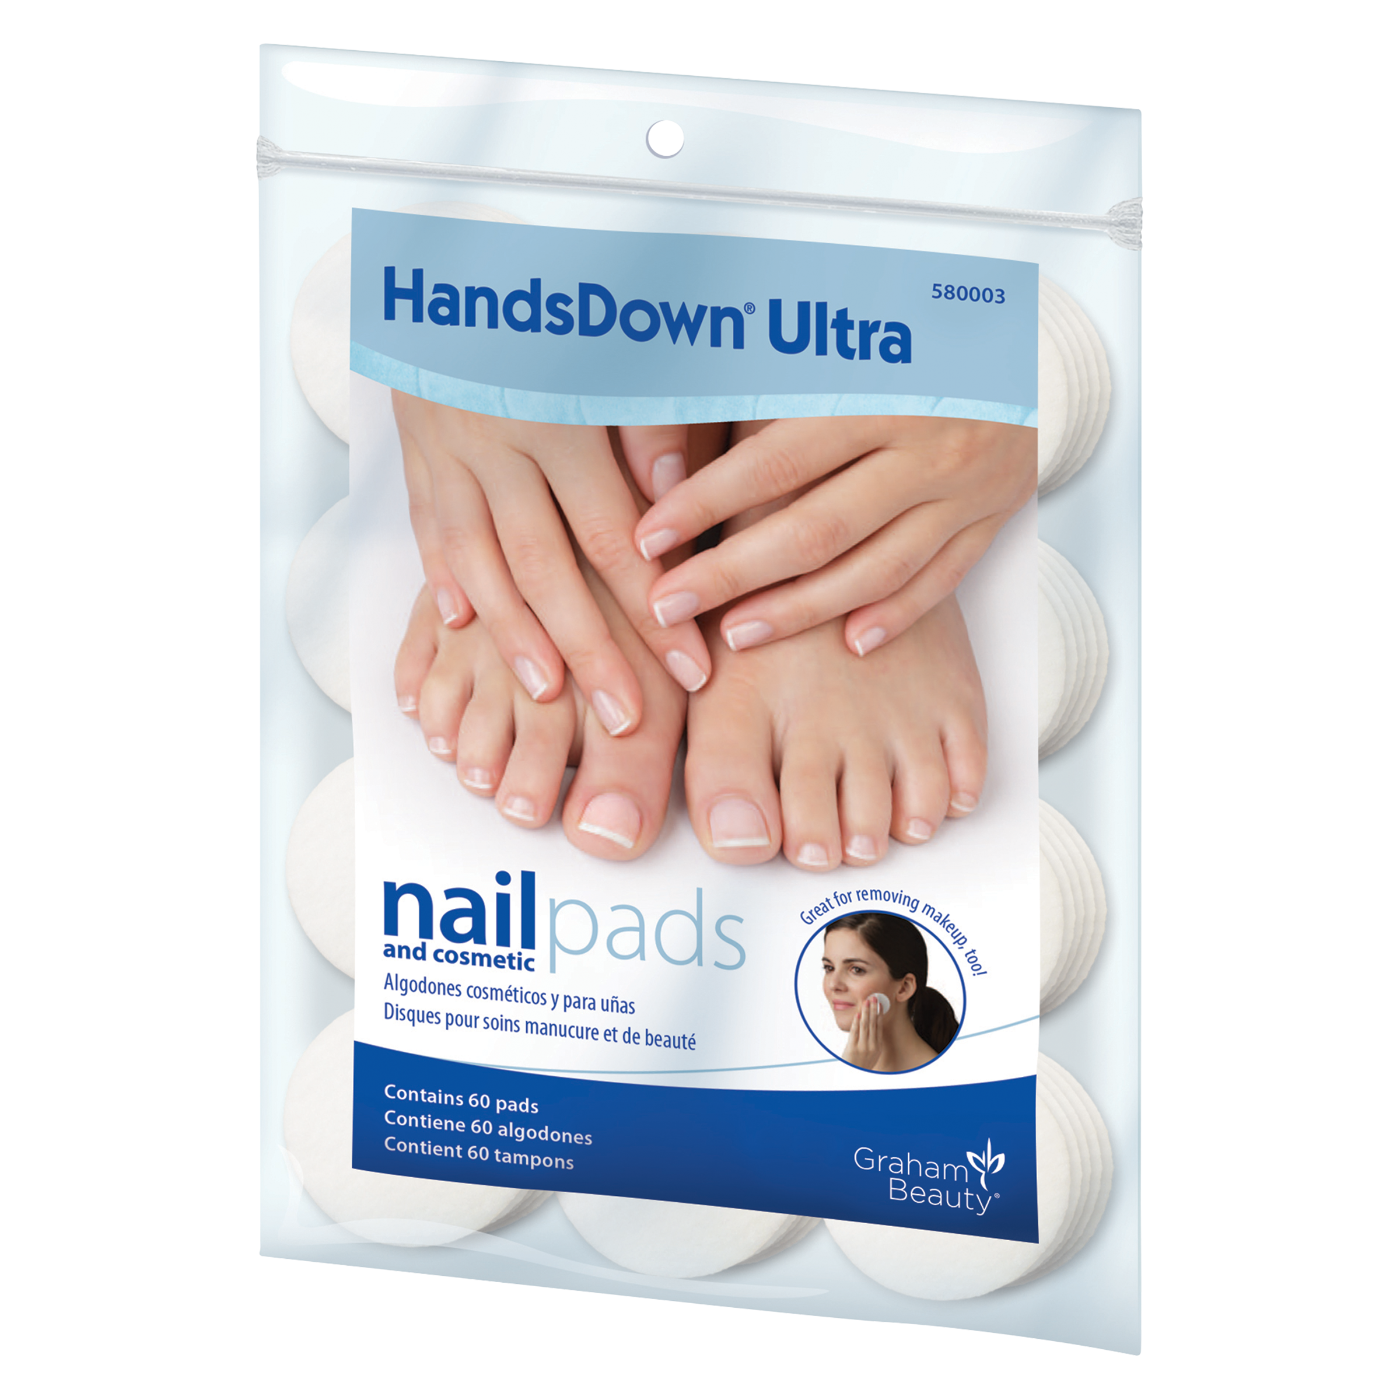 HandsDown® Ultra Nail & Cosmetic Pads, bag of 60 pads